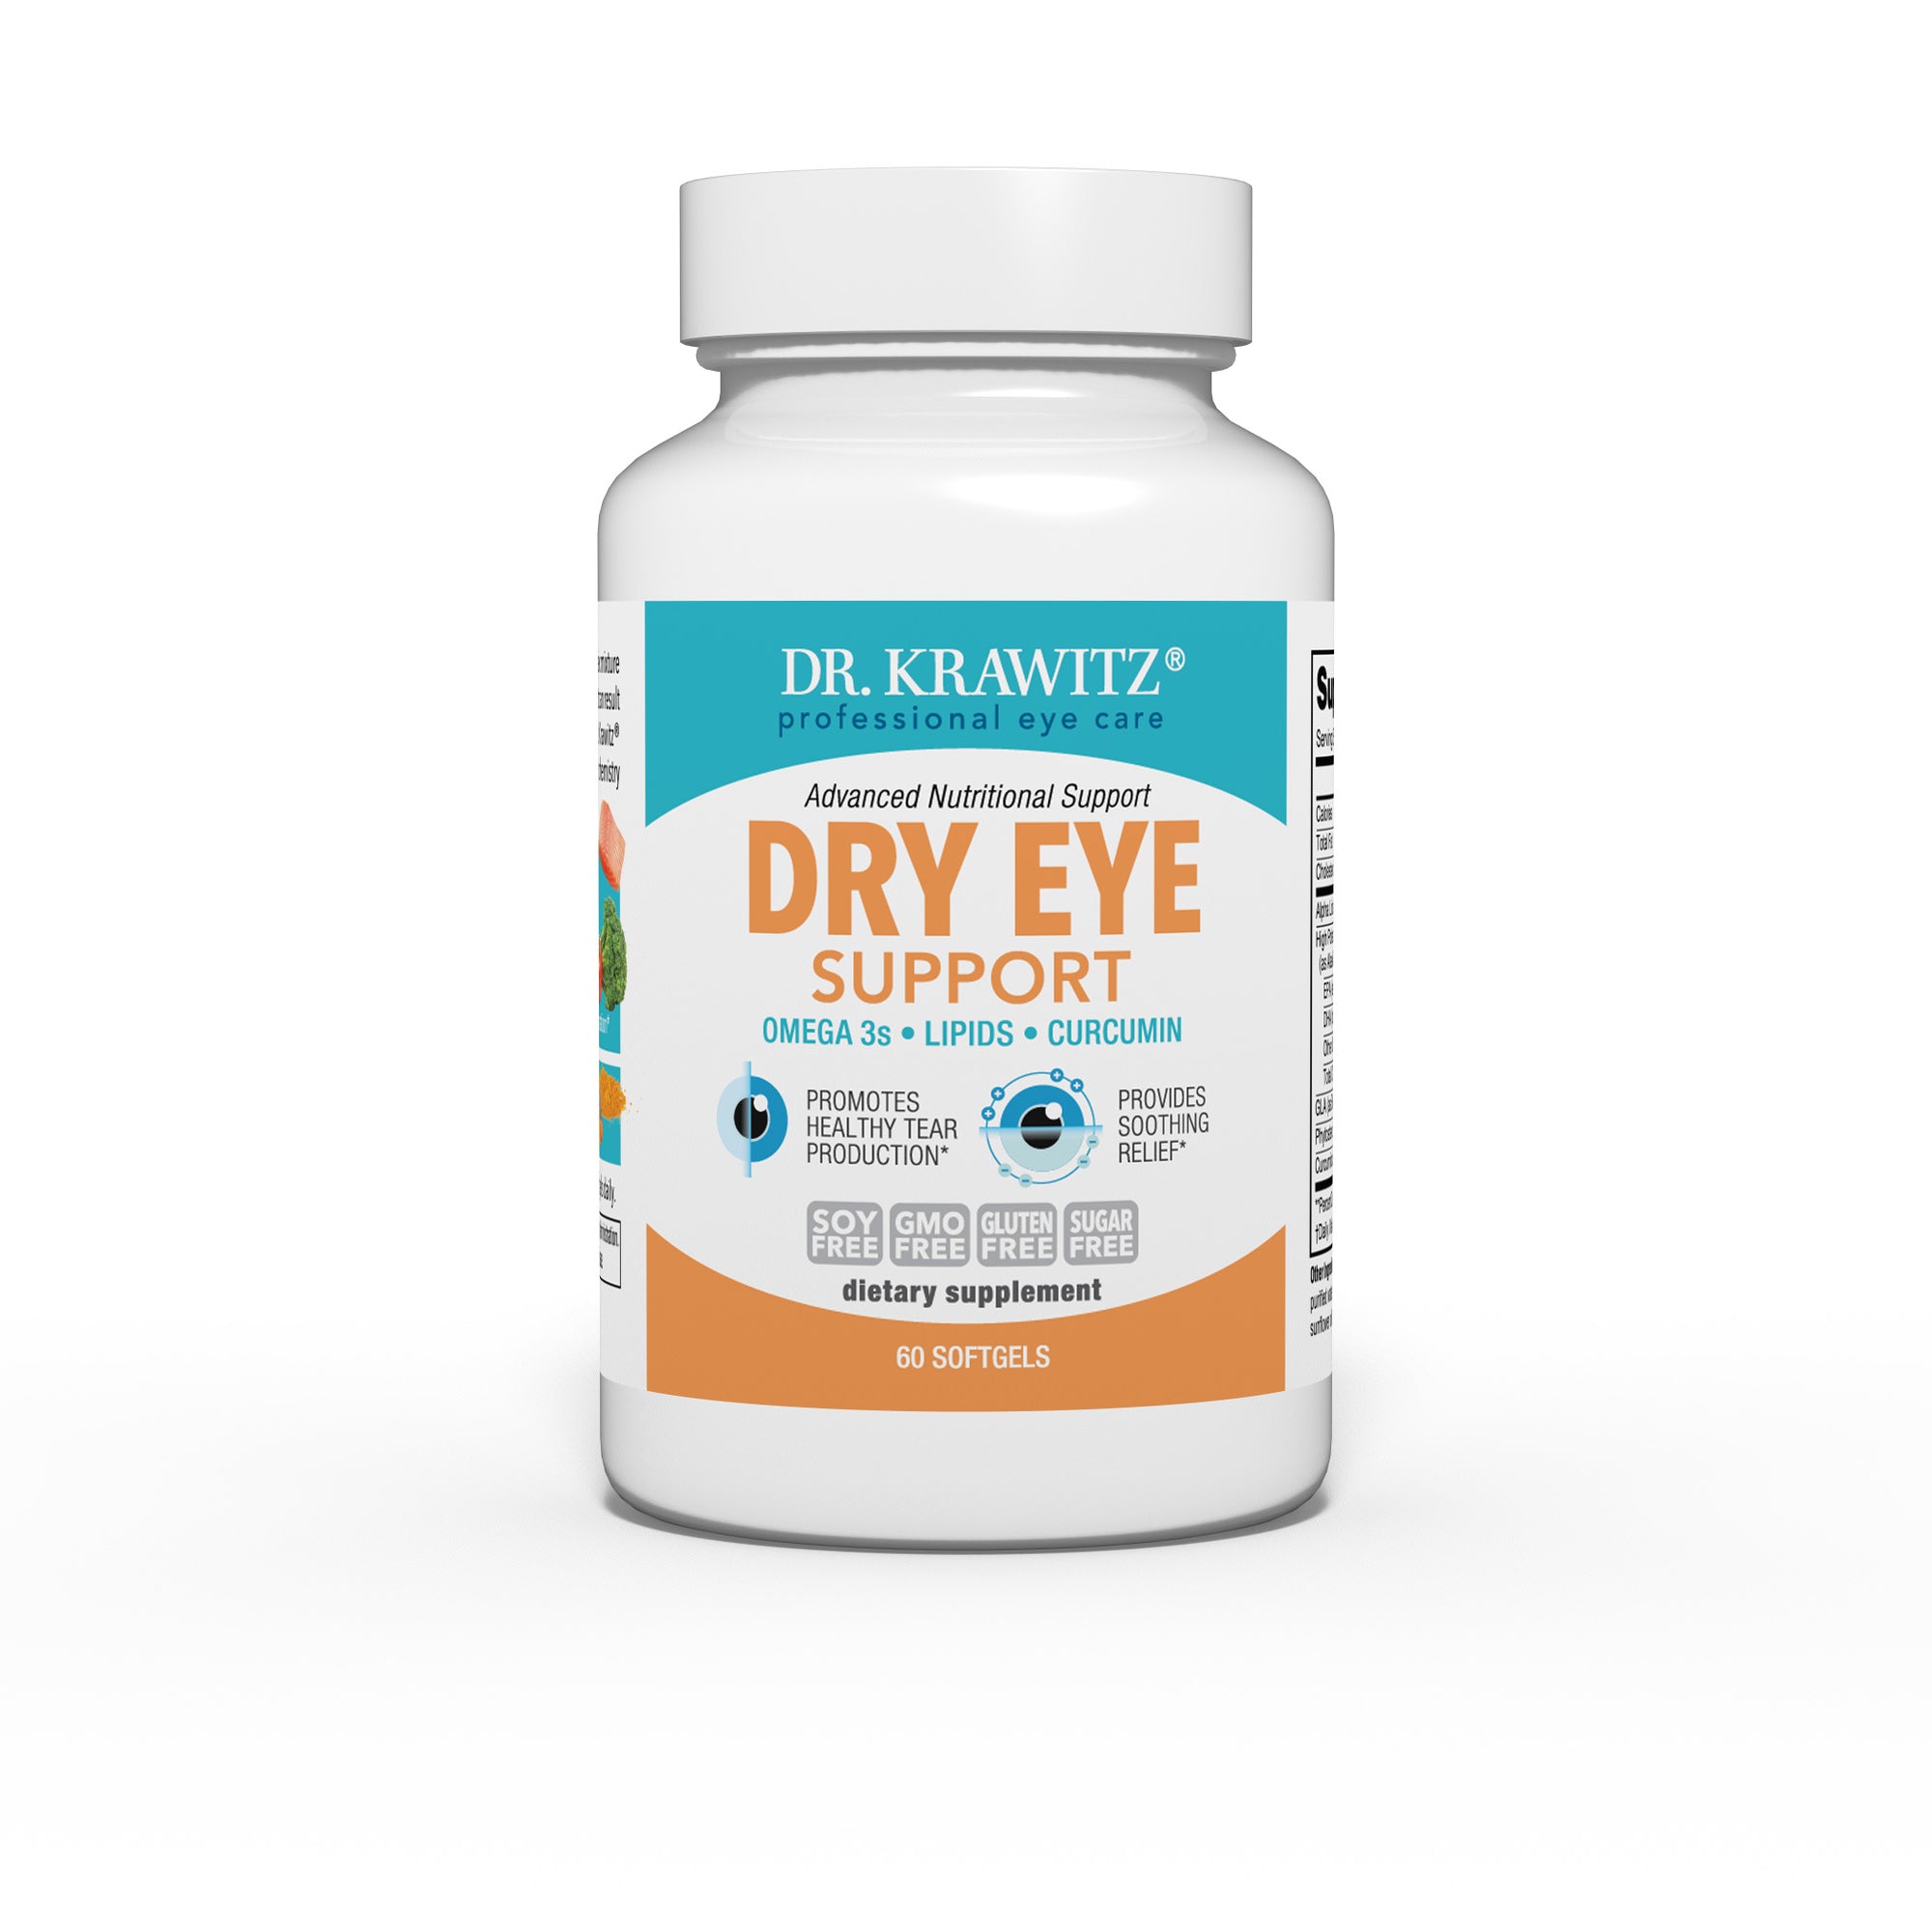 Dry Eye Support